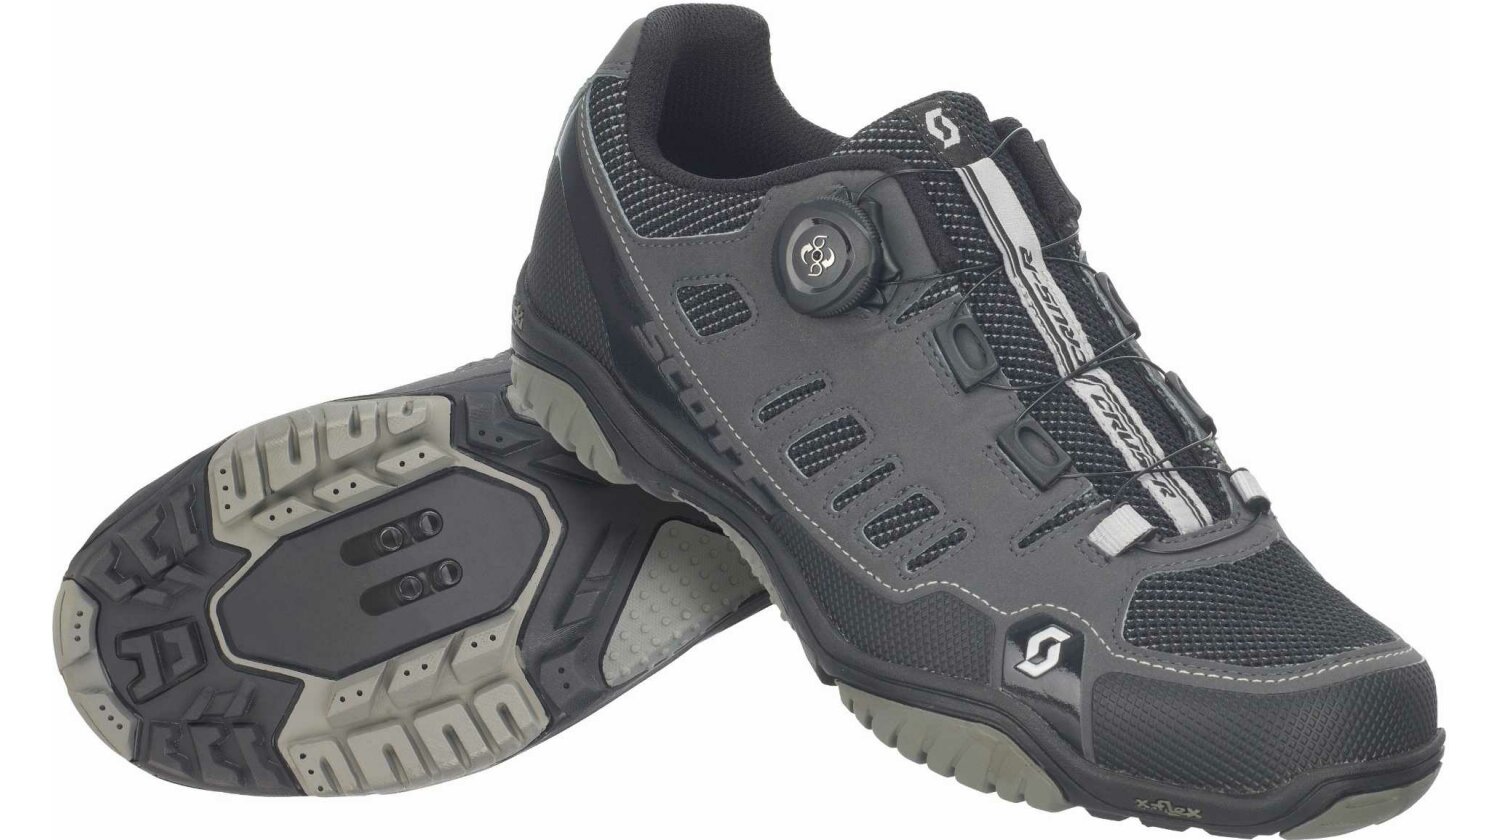 Scott Sport Crus-r Boa Schuhe anthracite/black